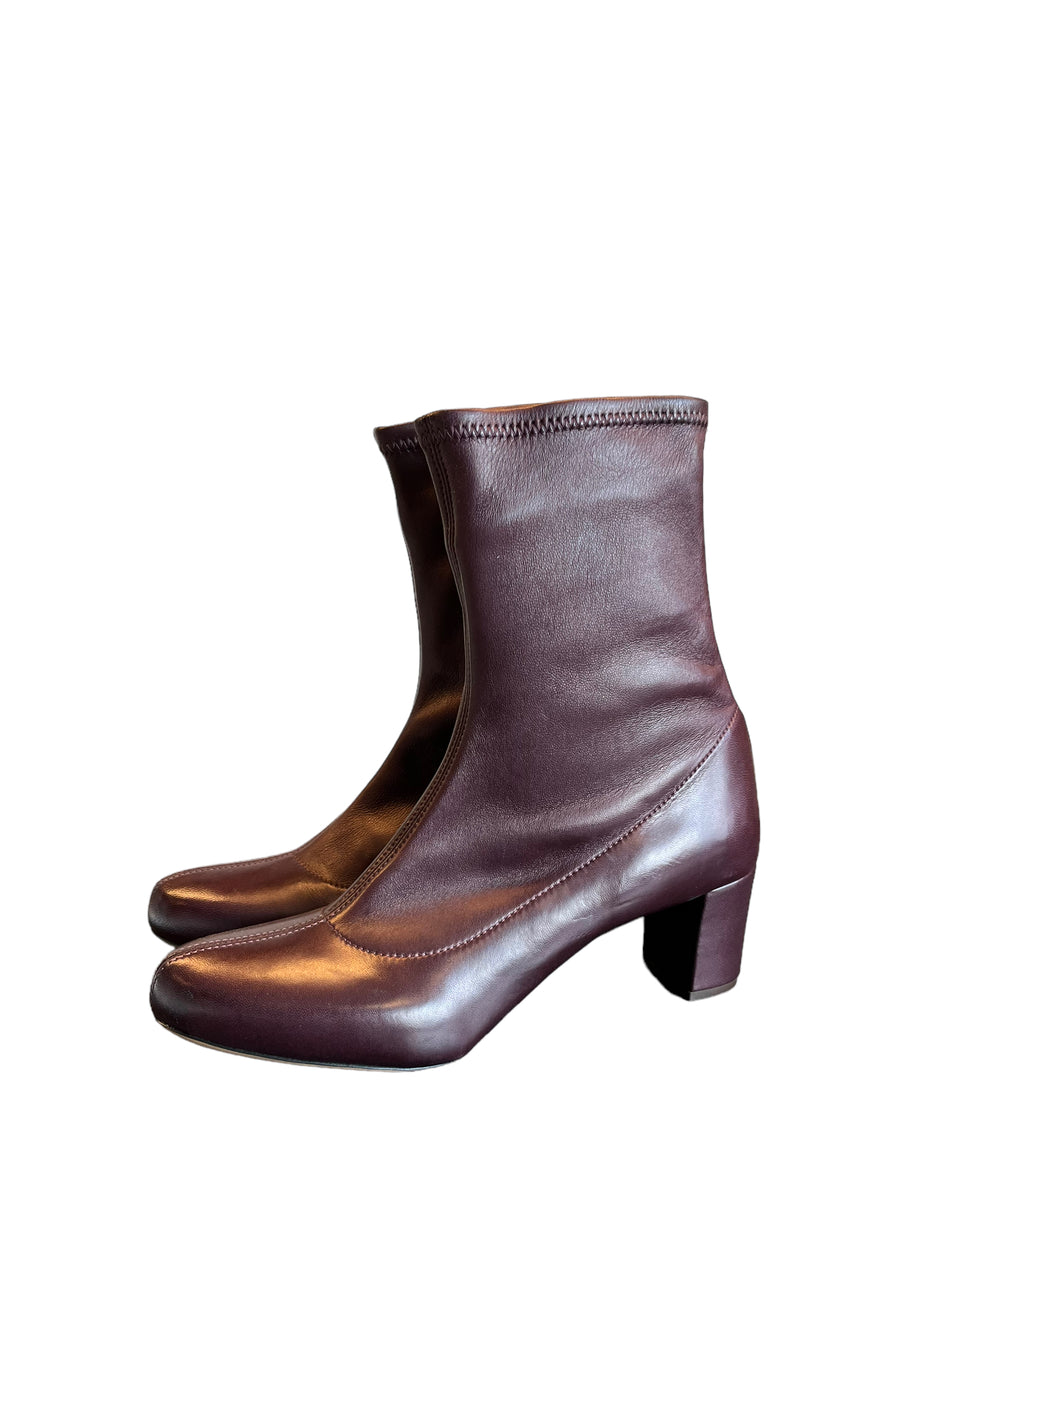 Chloé sock boots (39)